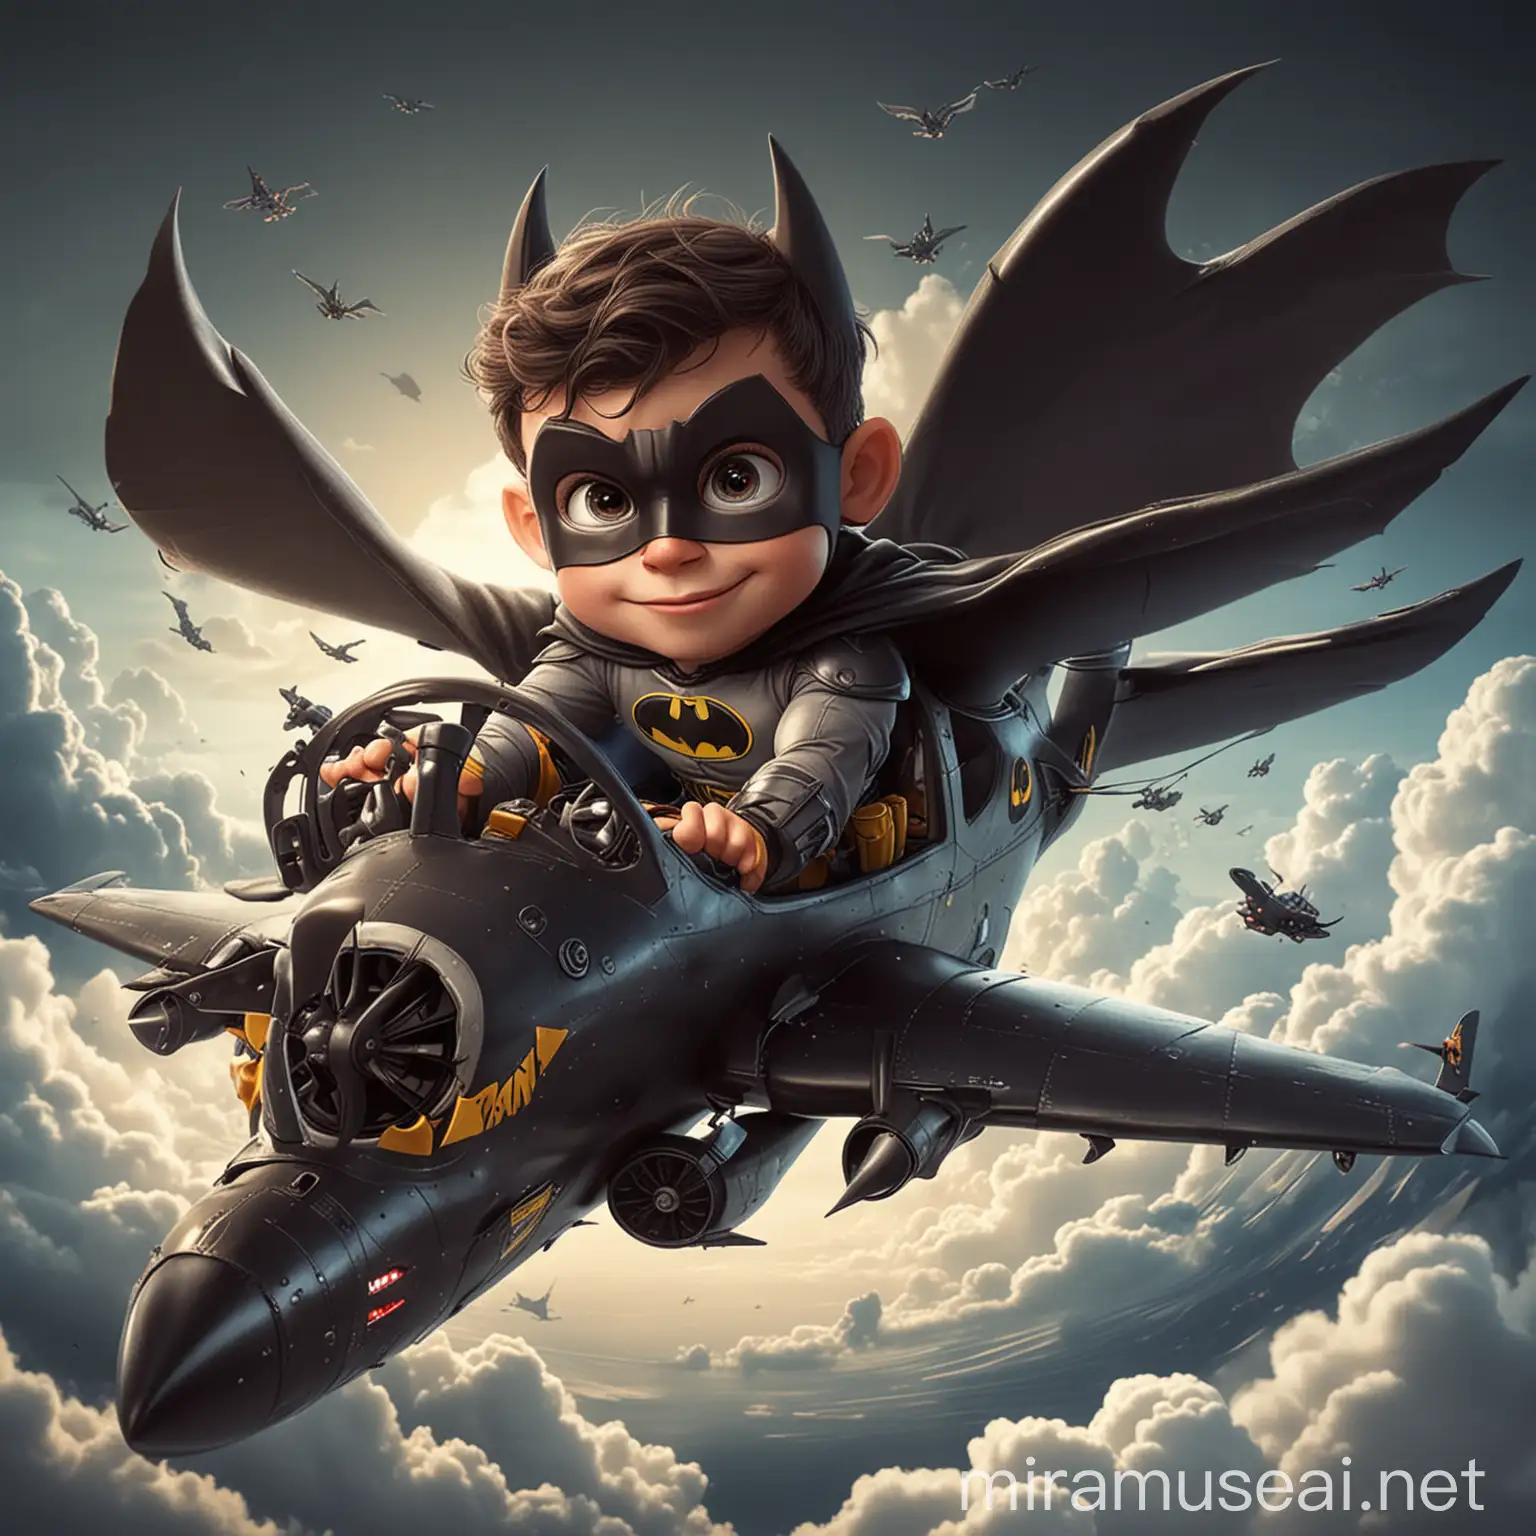 Playful Cartoon Kid as Batman Flying a Plane